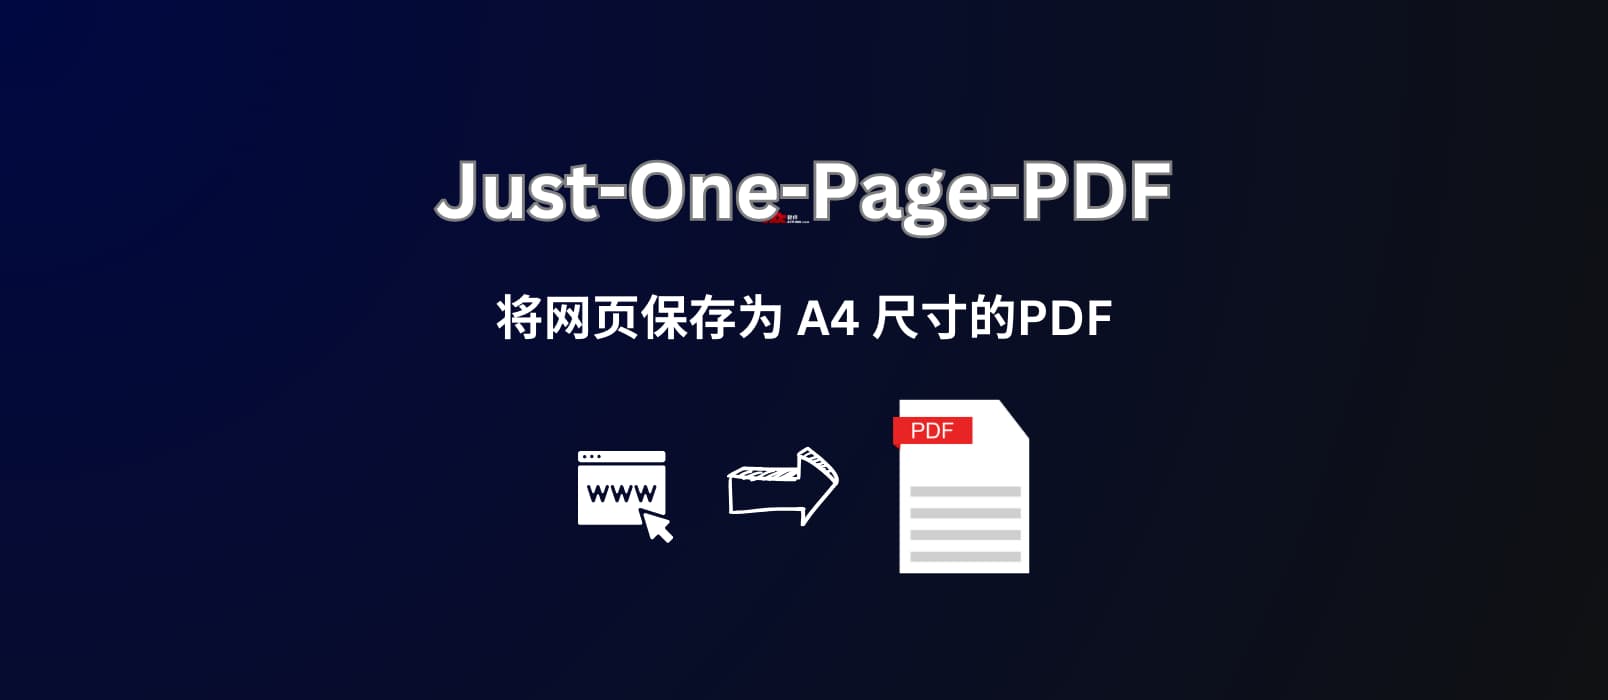 Just-One-Page-PDF - 将网页保存为 PDF：A4 尺寸，支持保存为一页或多页 PDF[Chrome]